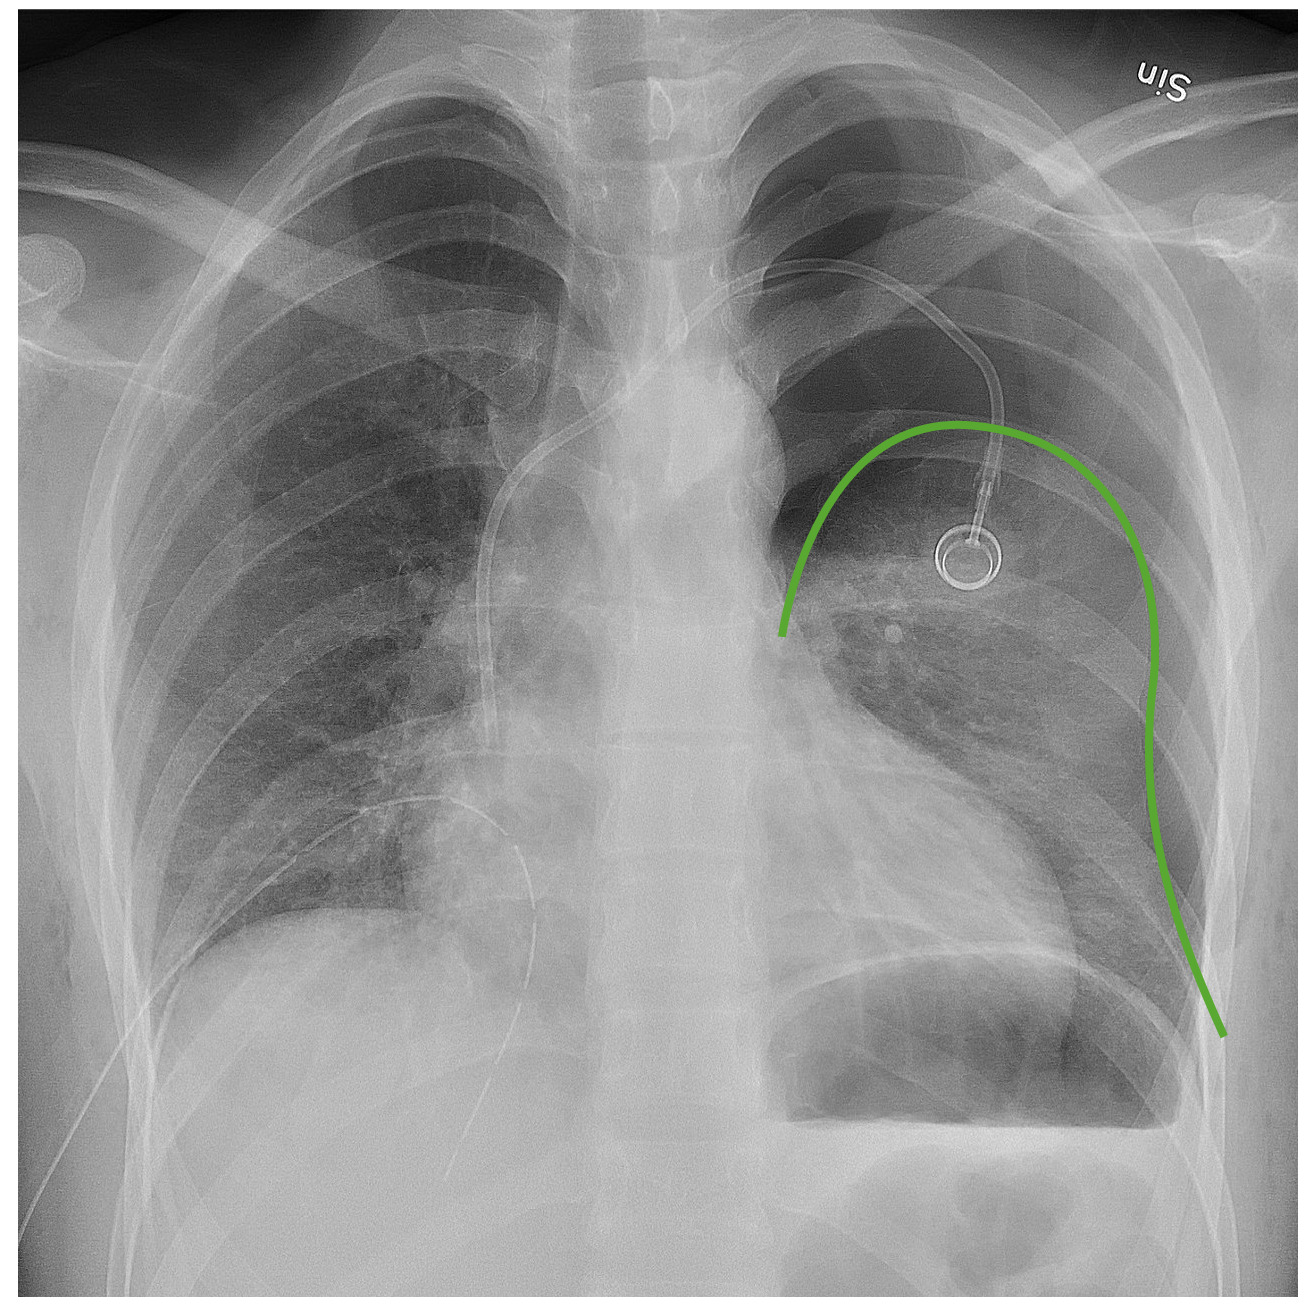 Chest xray showing left pneumothorax